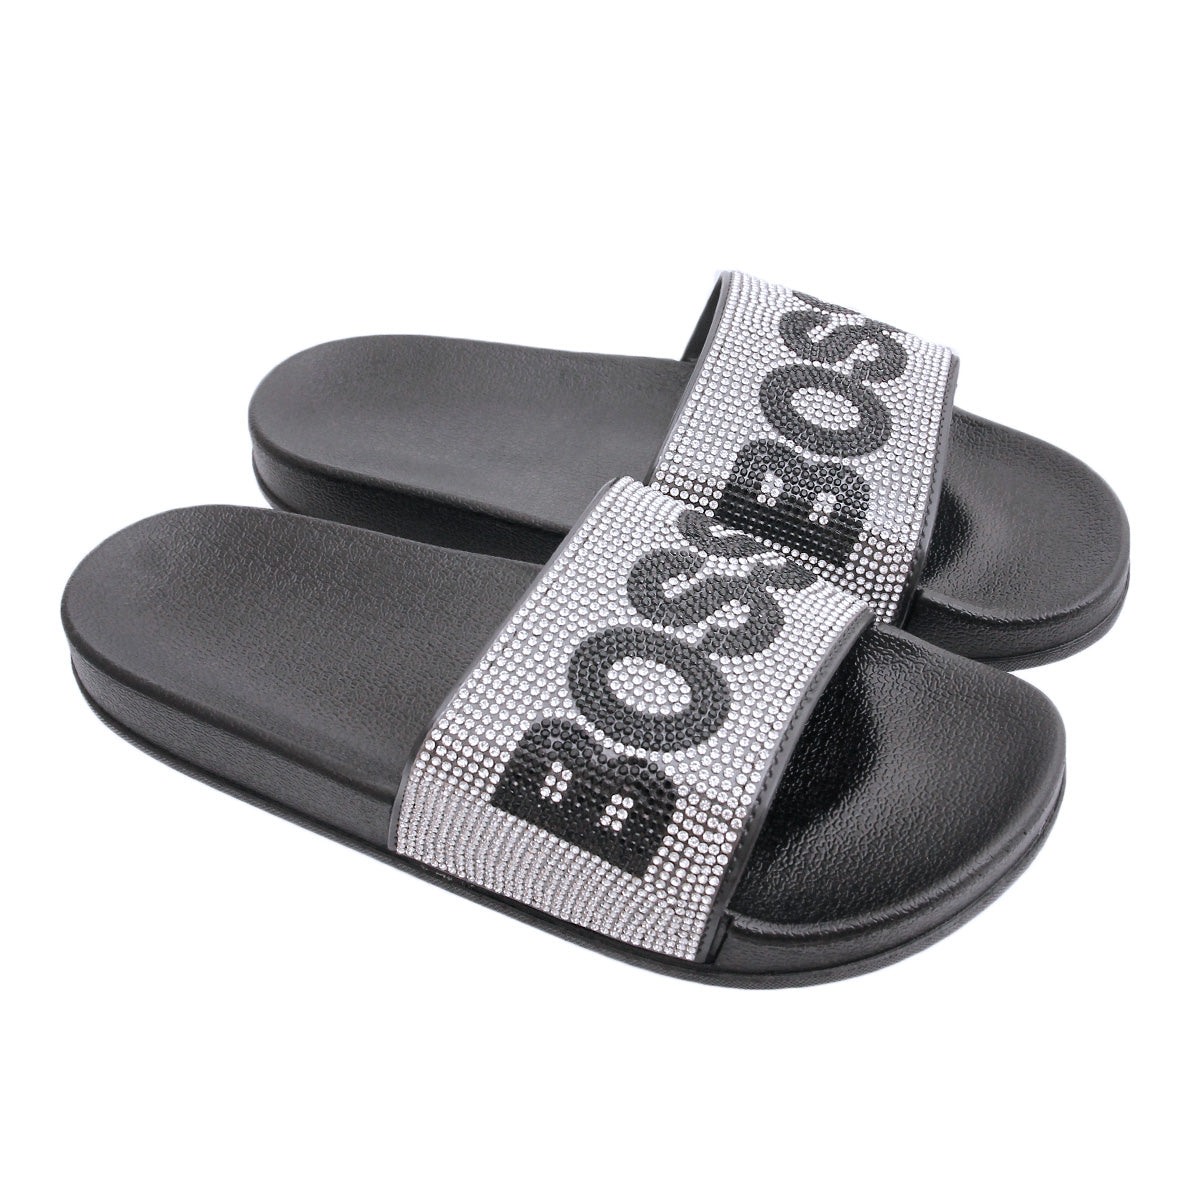 Size 10 Silver BOSS Black Slides